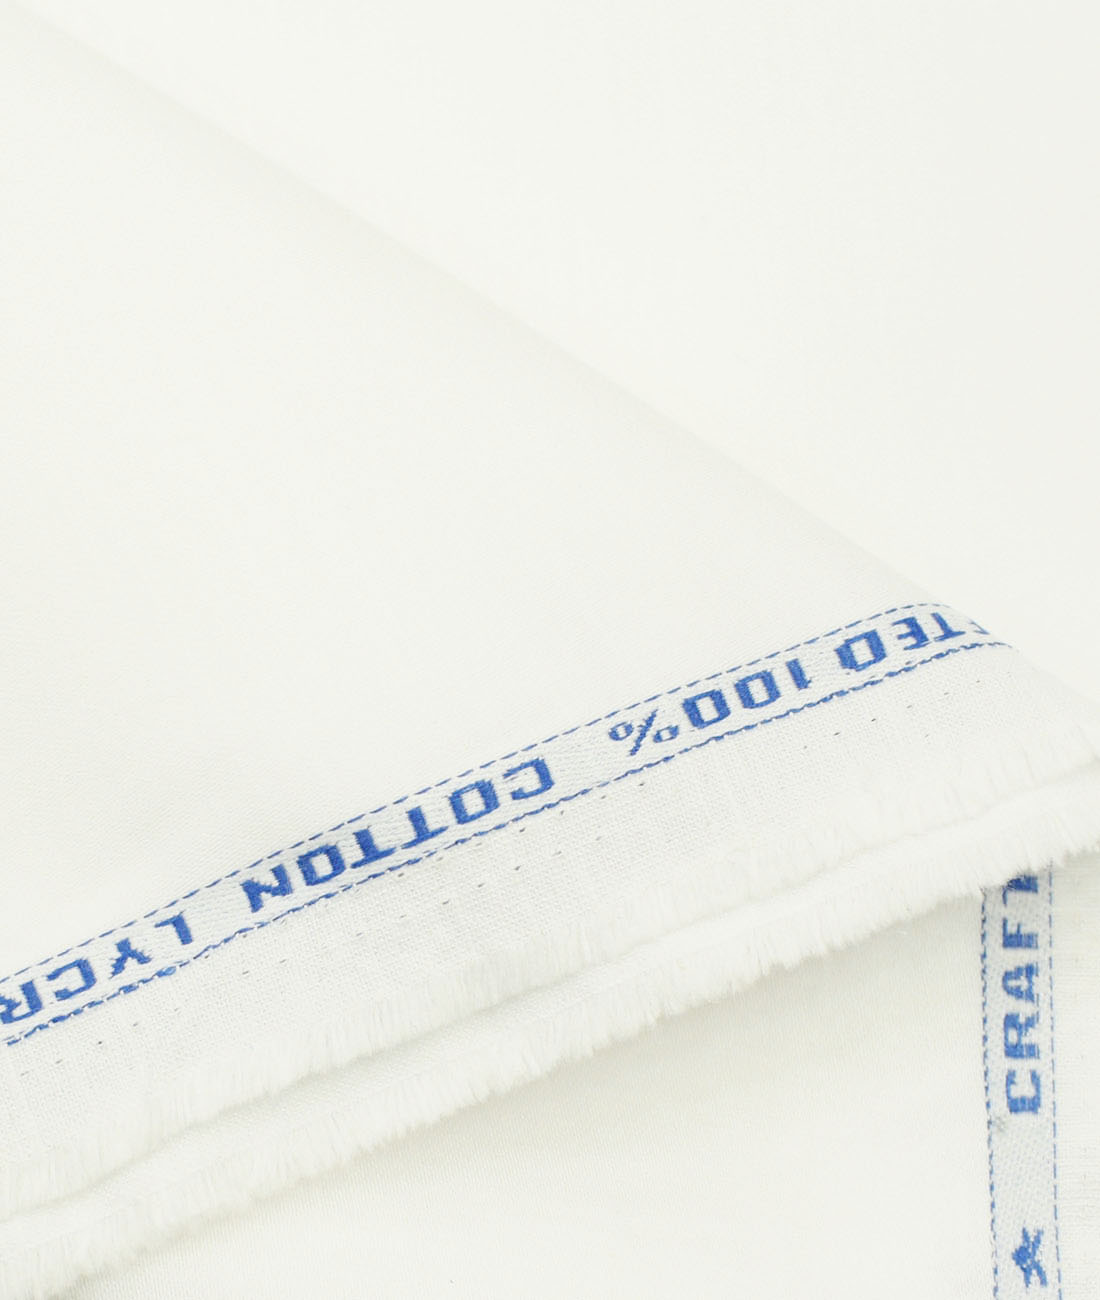 Burgoyne Men's Cotton Solids 1.50 Meter Unstitched Trouser Fabric (White)